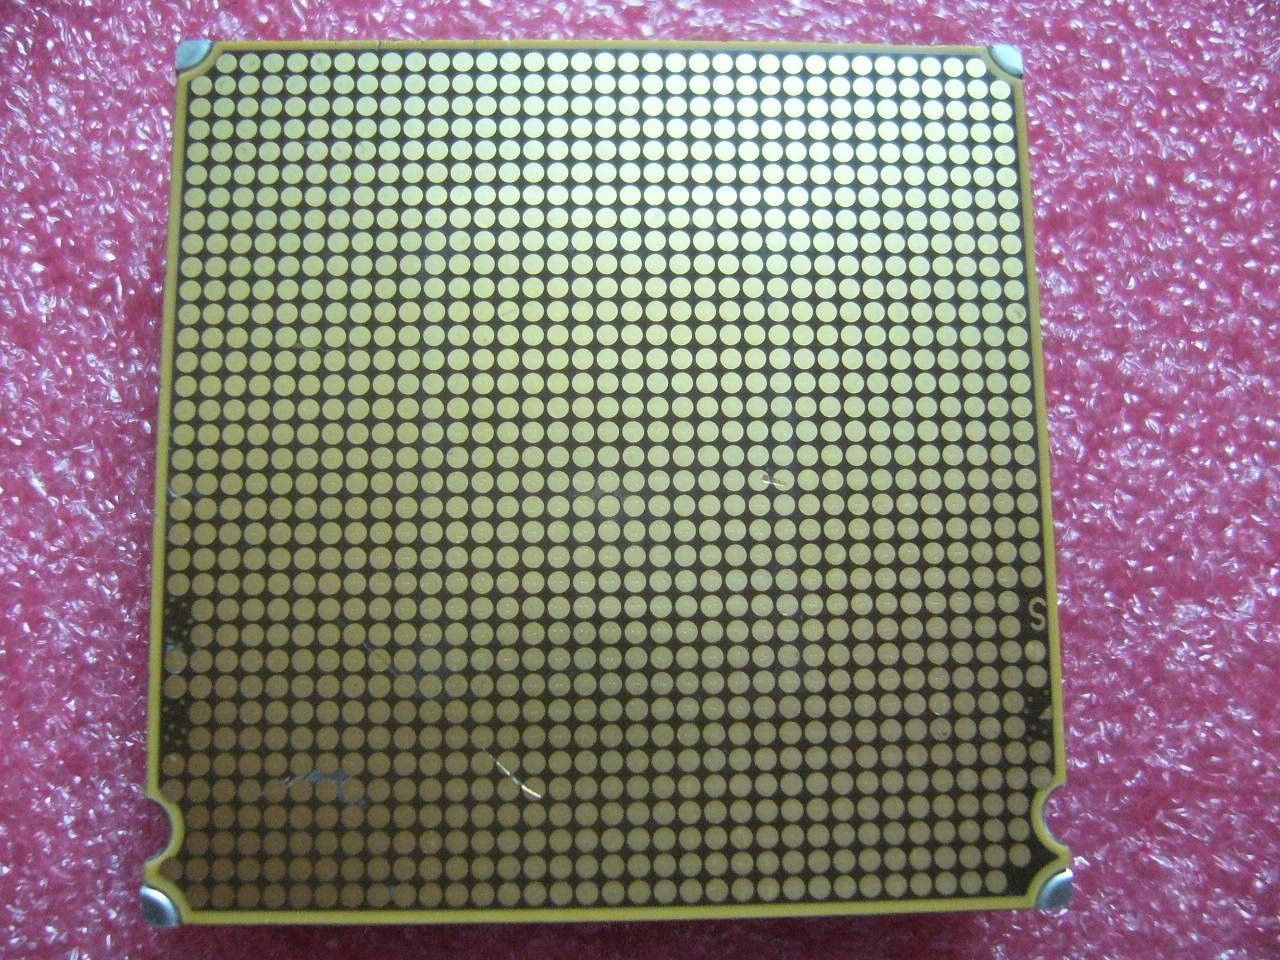 QTY 1x AMD Opteron 4332 HE 3 GHz Six Core (OS4332OFU6KHK) CPU Socket C32 - Click Image to Close